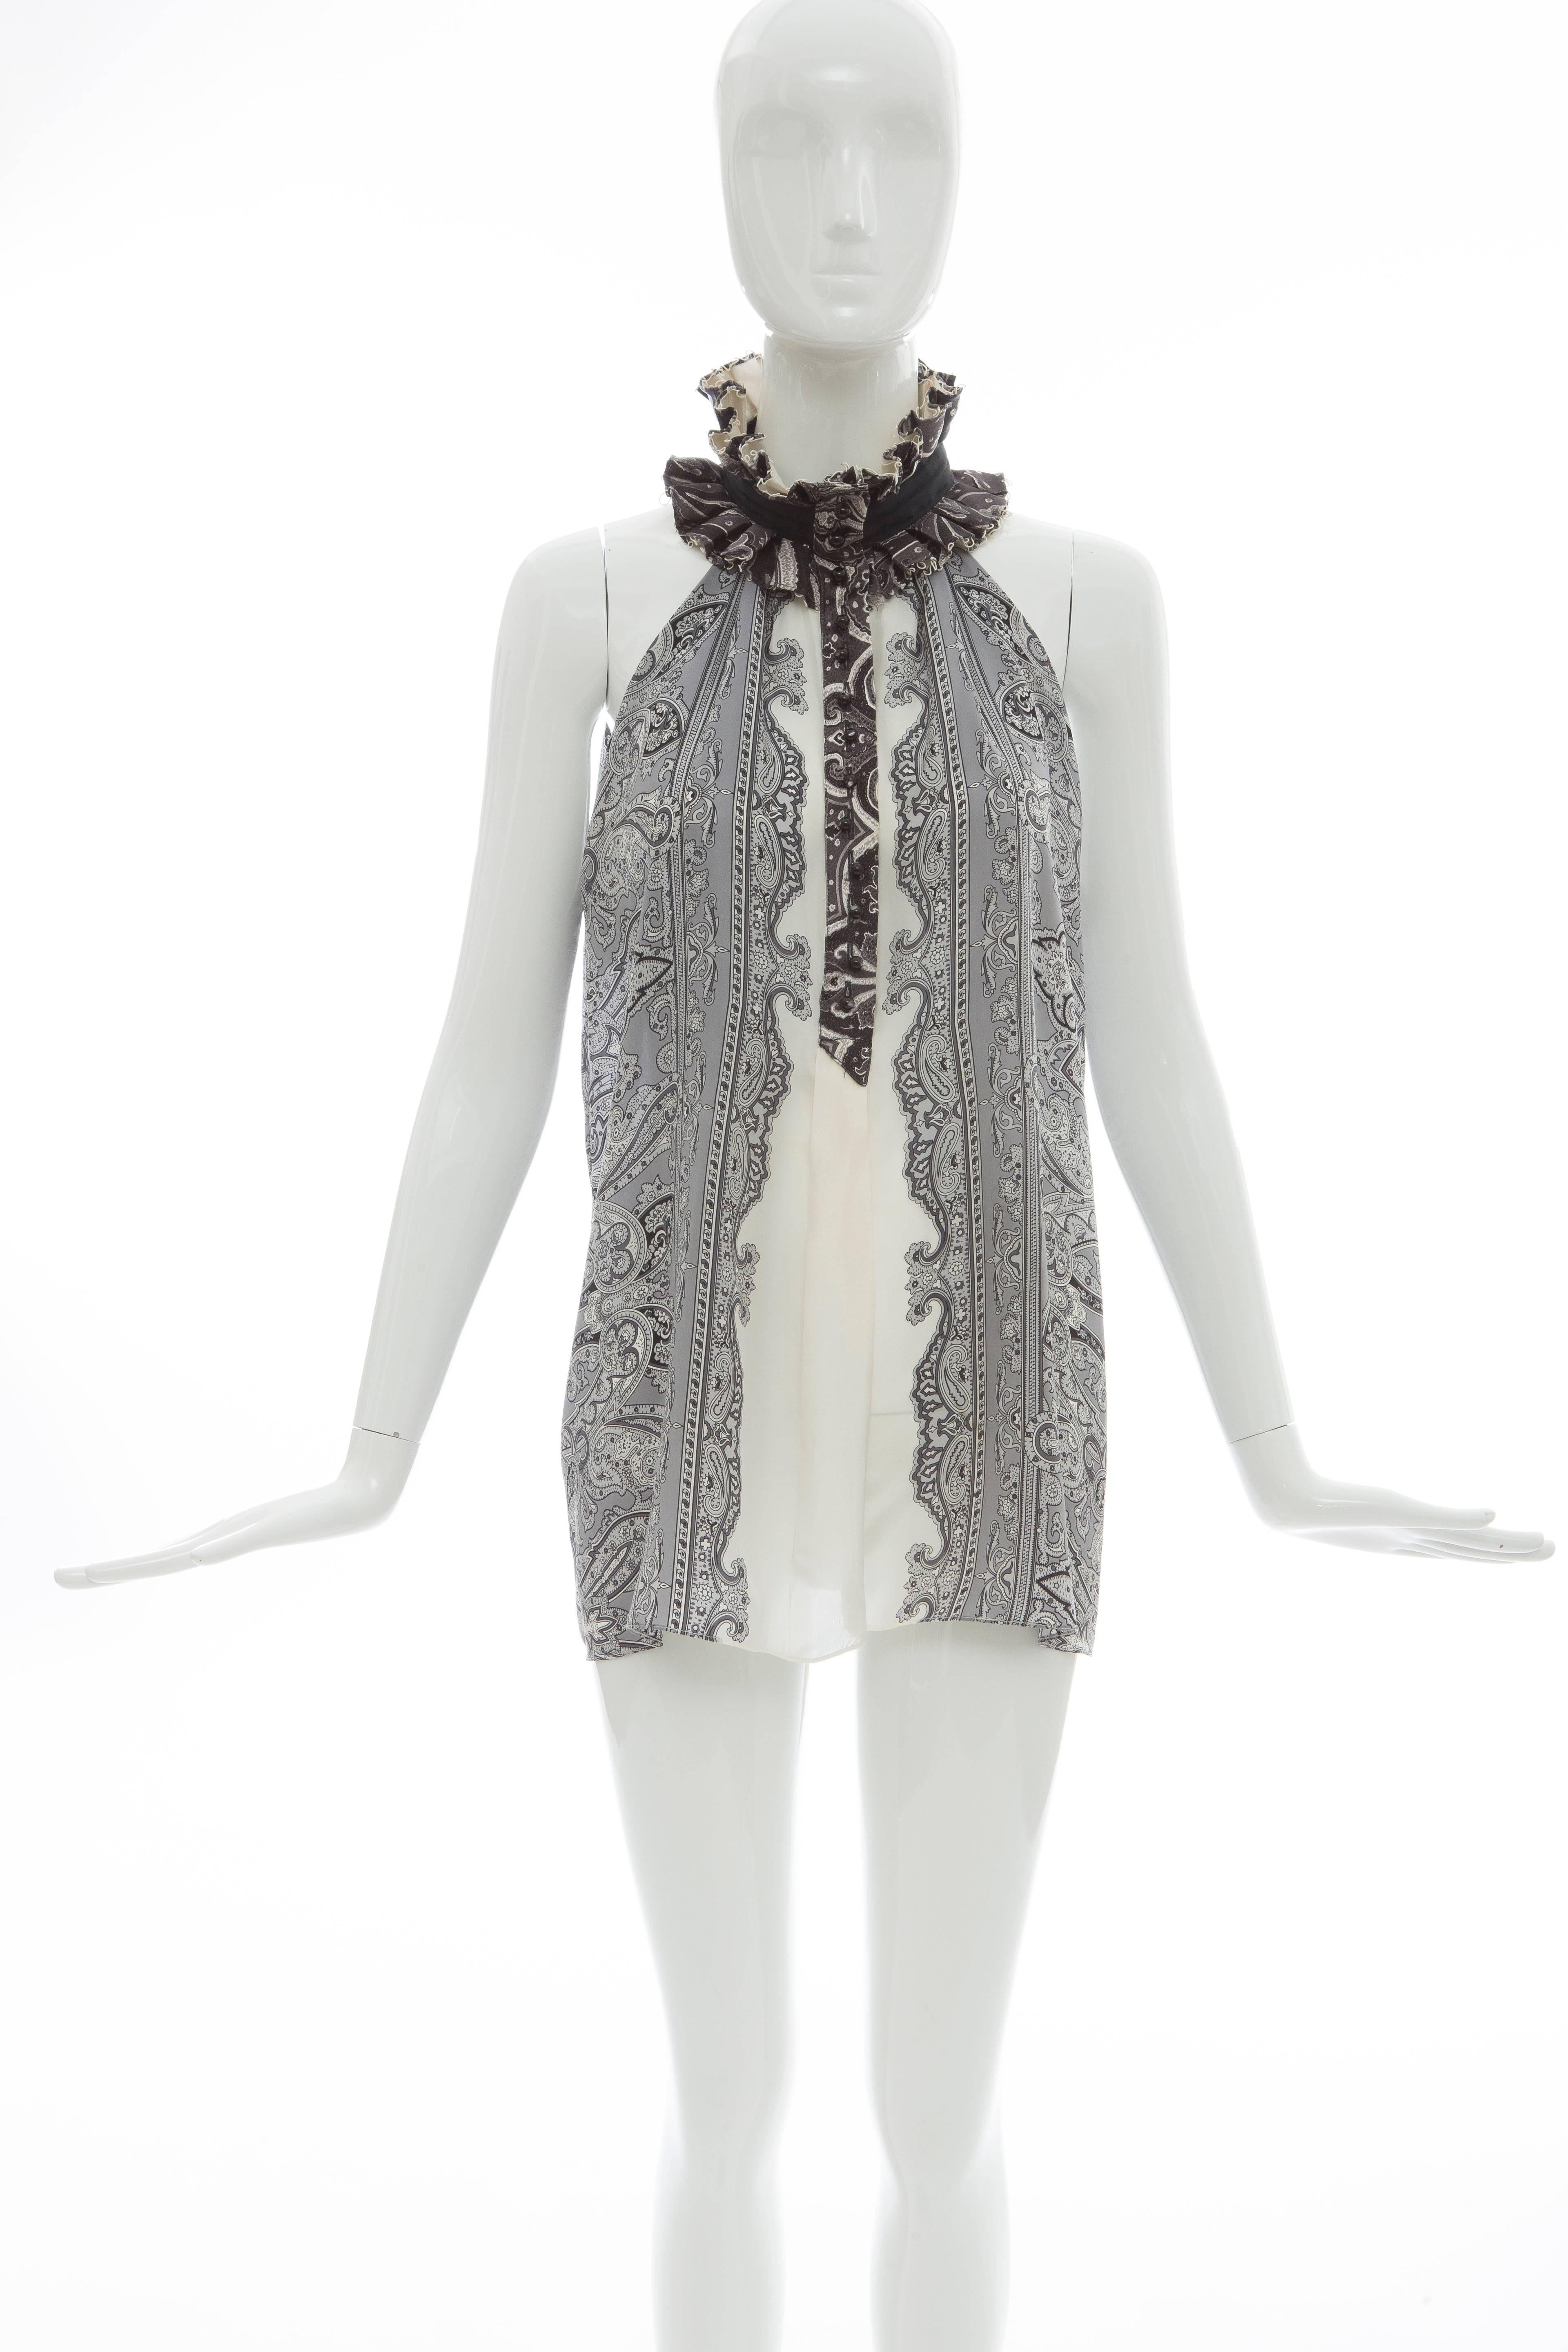 Nicolas Ghesquière for Balenciaga, Spring-Summer 2006 silk paisley sleeveless blouse with pleated collar and front button closure.

FR. 40
US. 8

Bust: 42"
Waist: 46"
Length: 28"